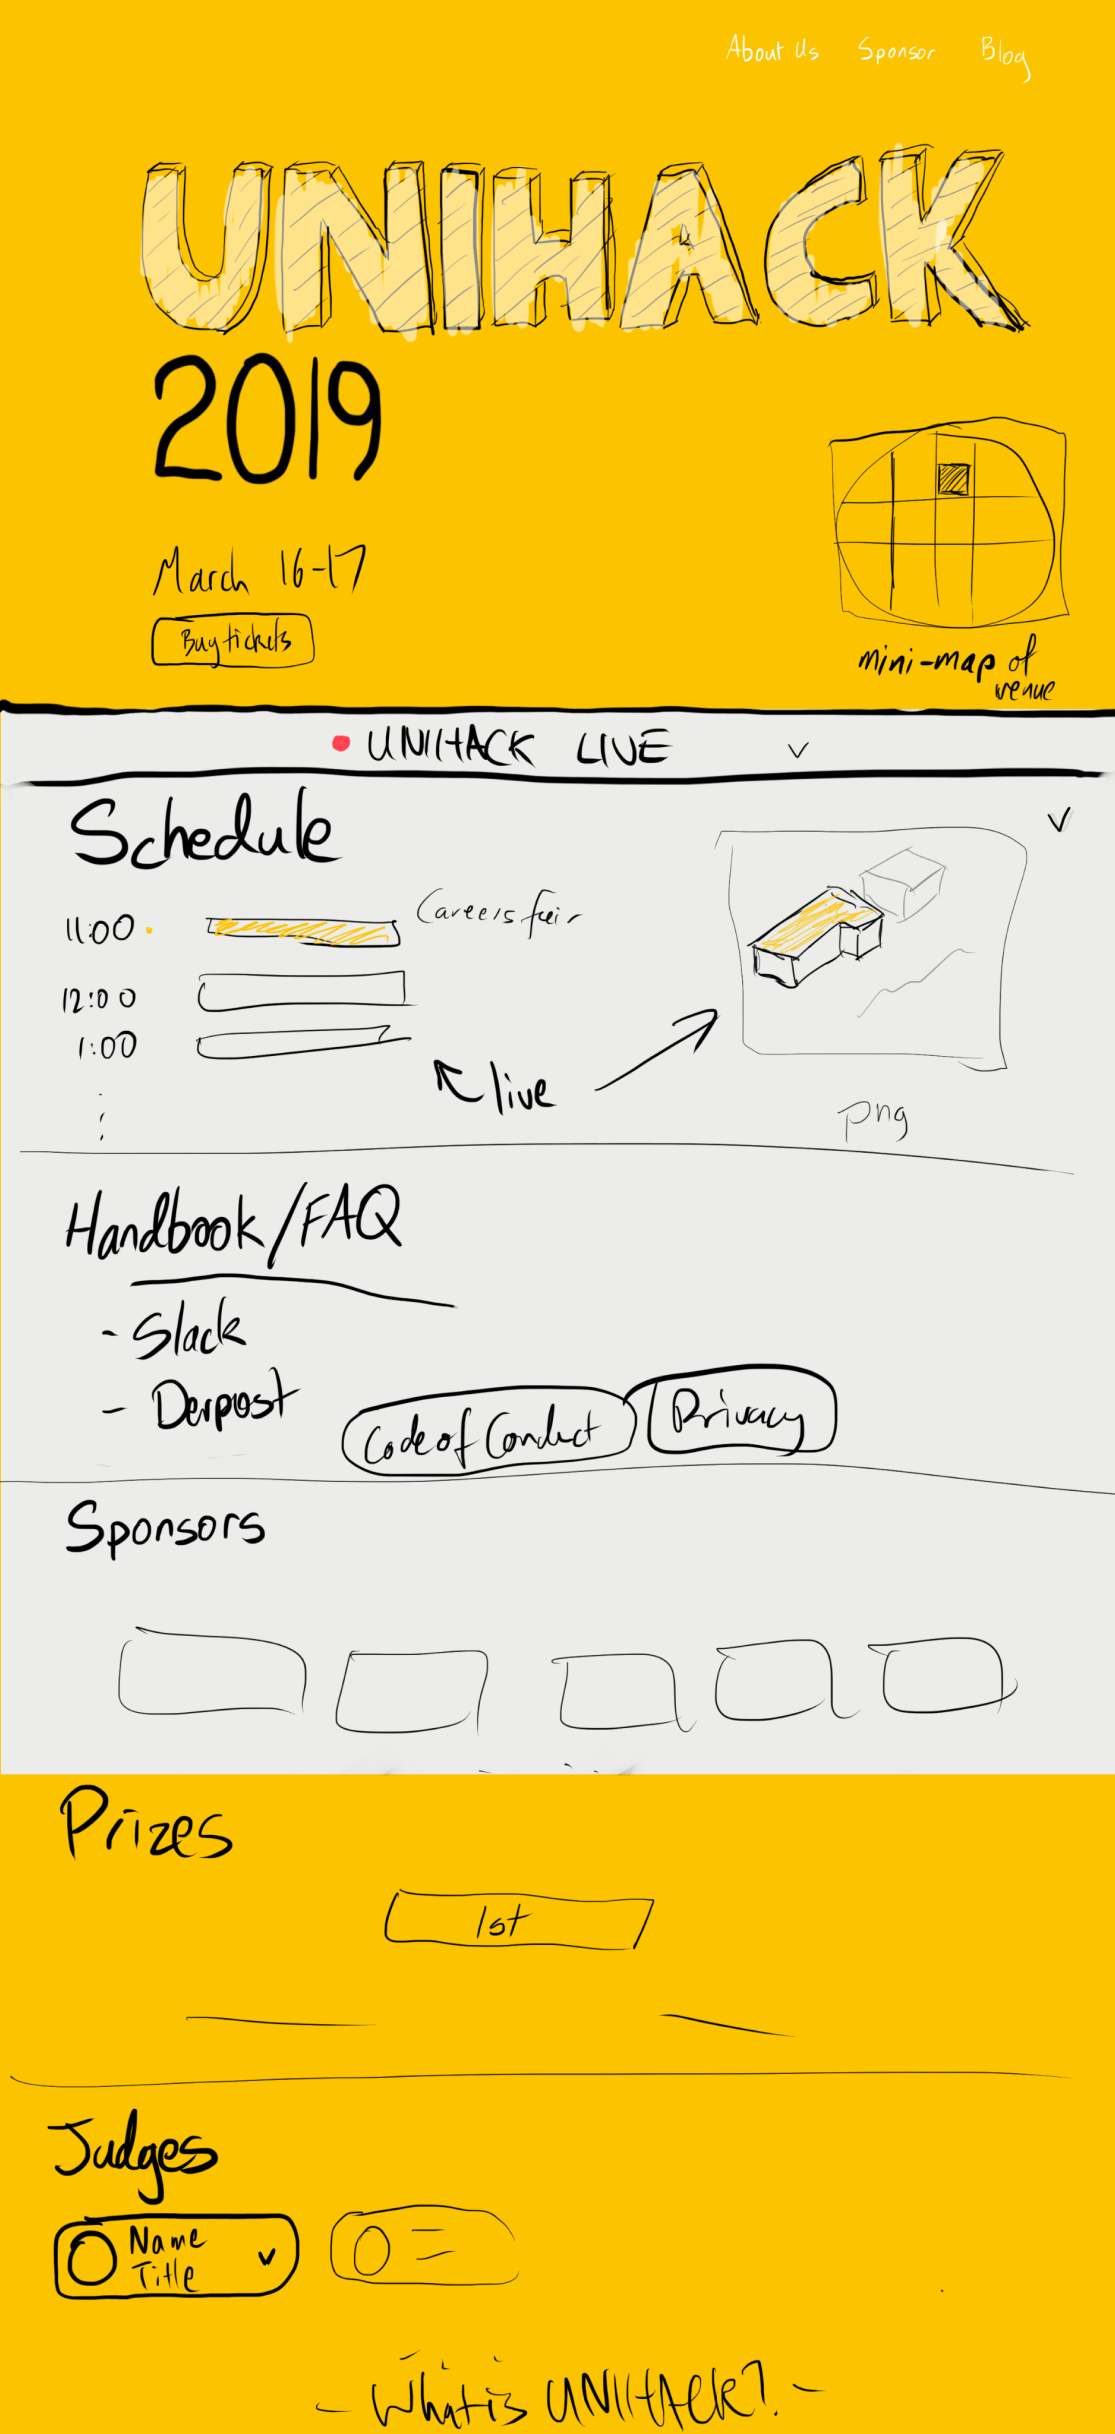 A sketch of the future UNIHACK site